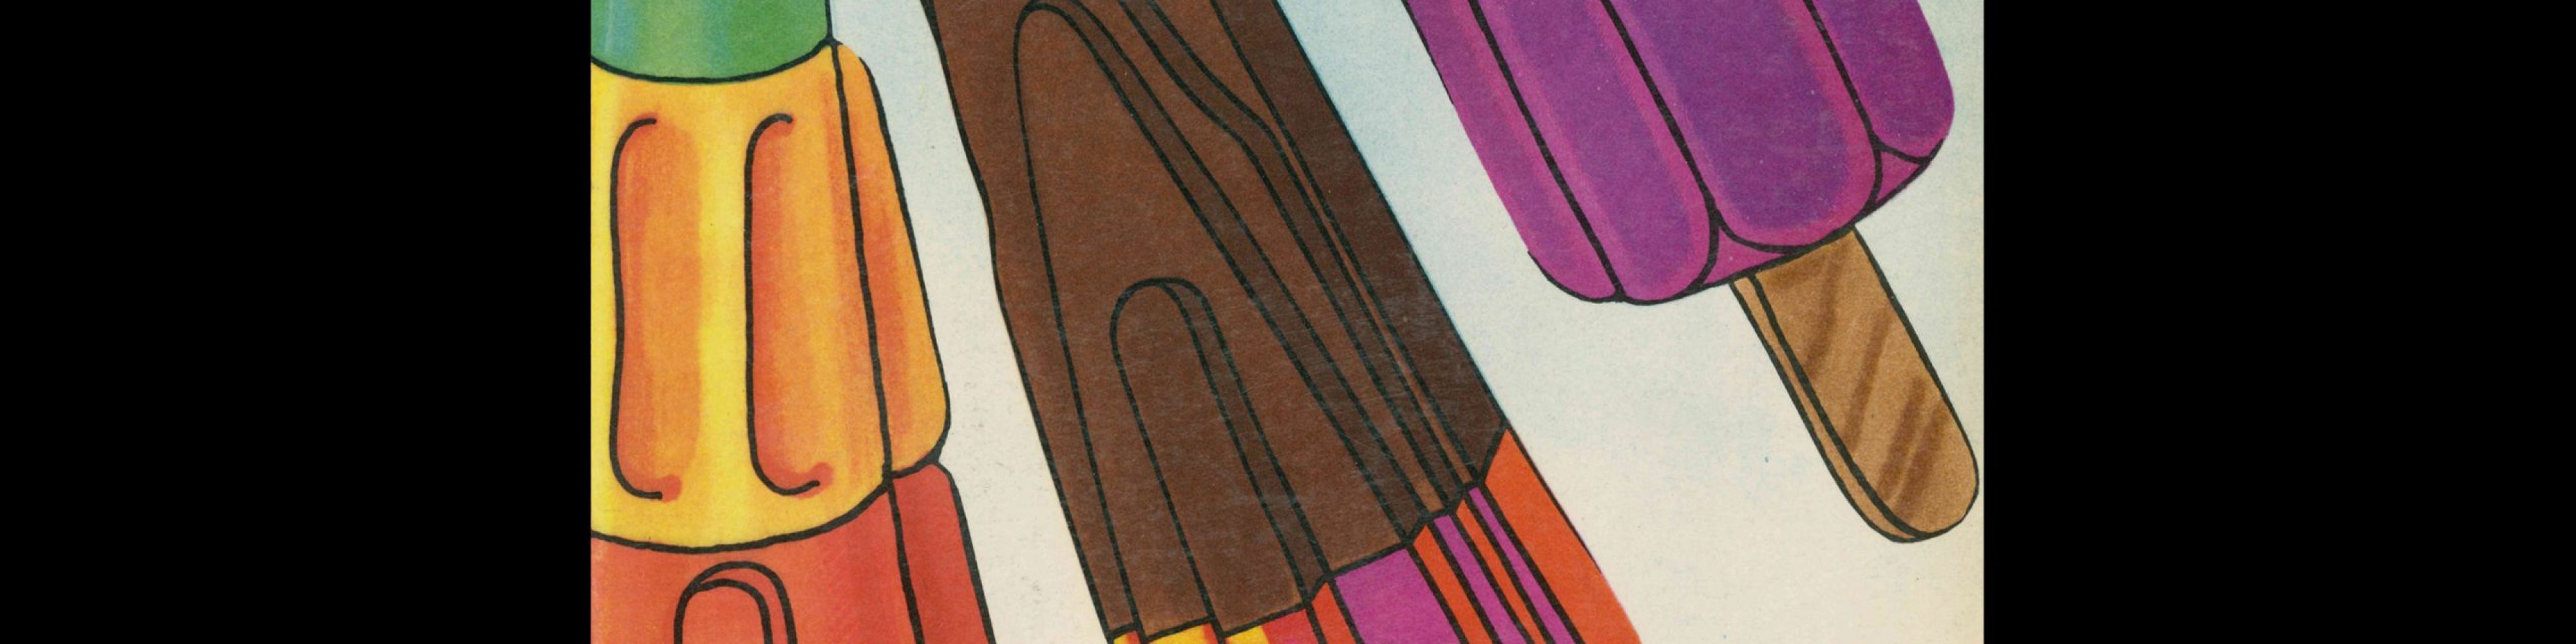 Projekt 87, 2, 1972. Cover design by Roslaw Szaybo